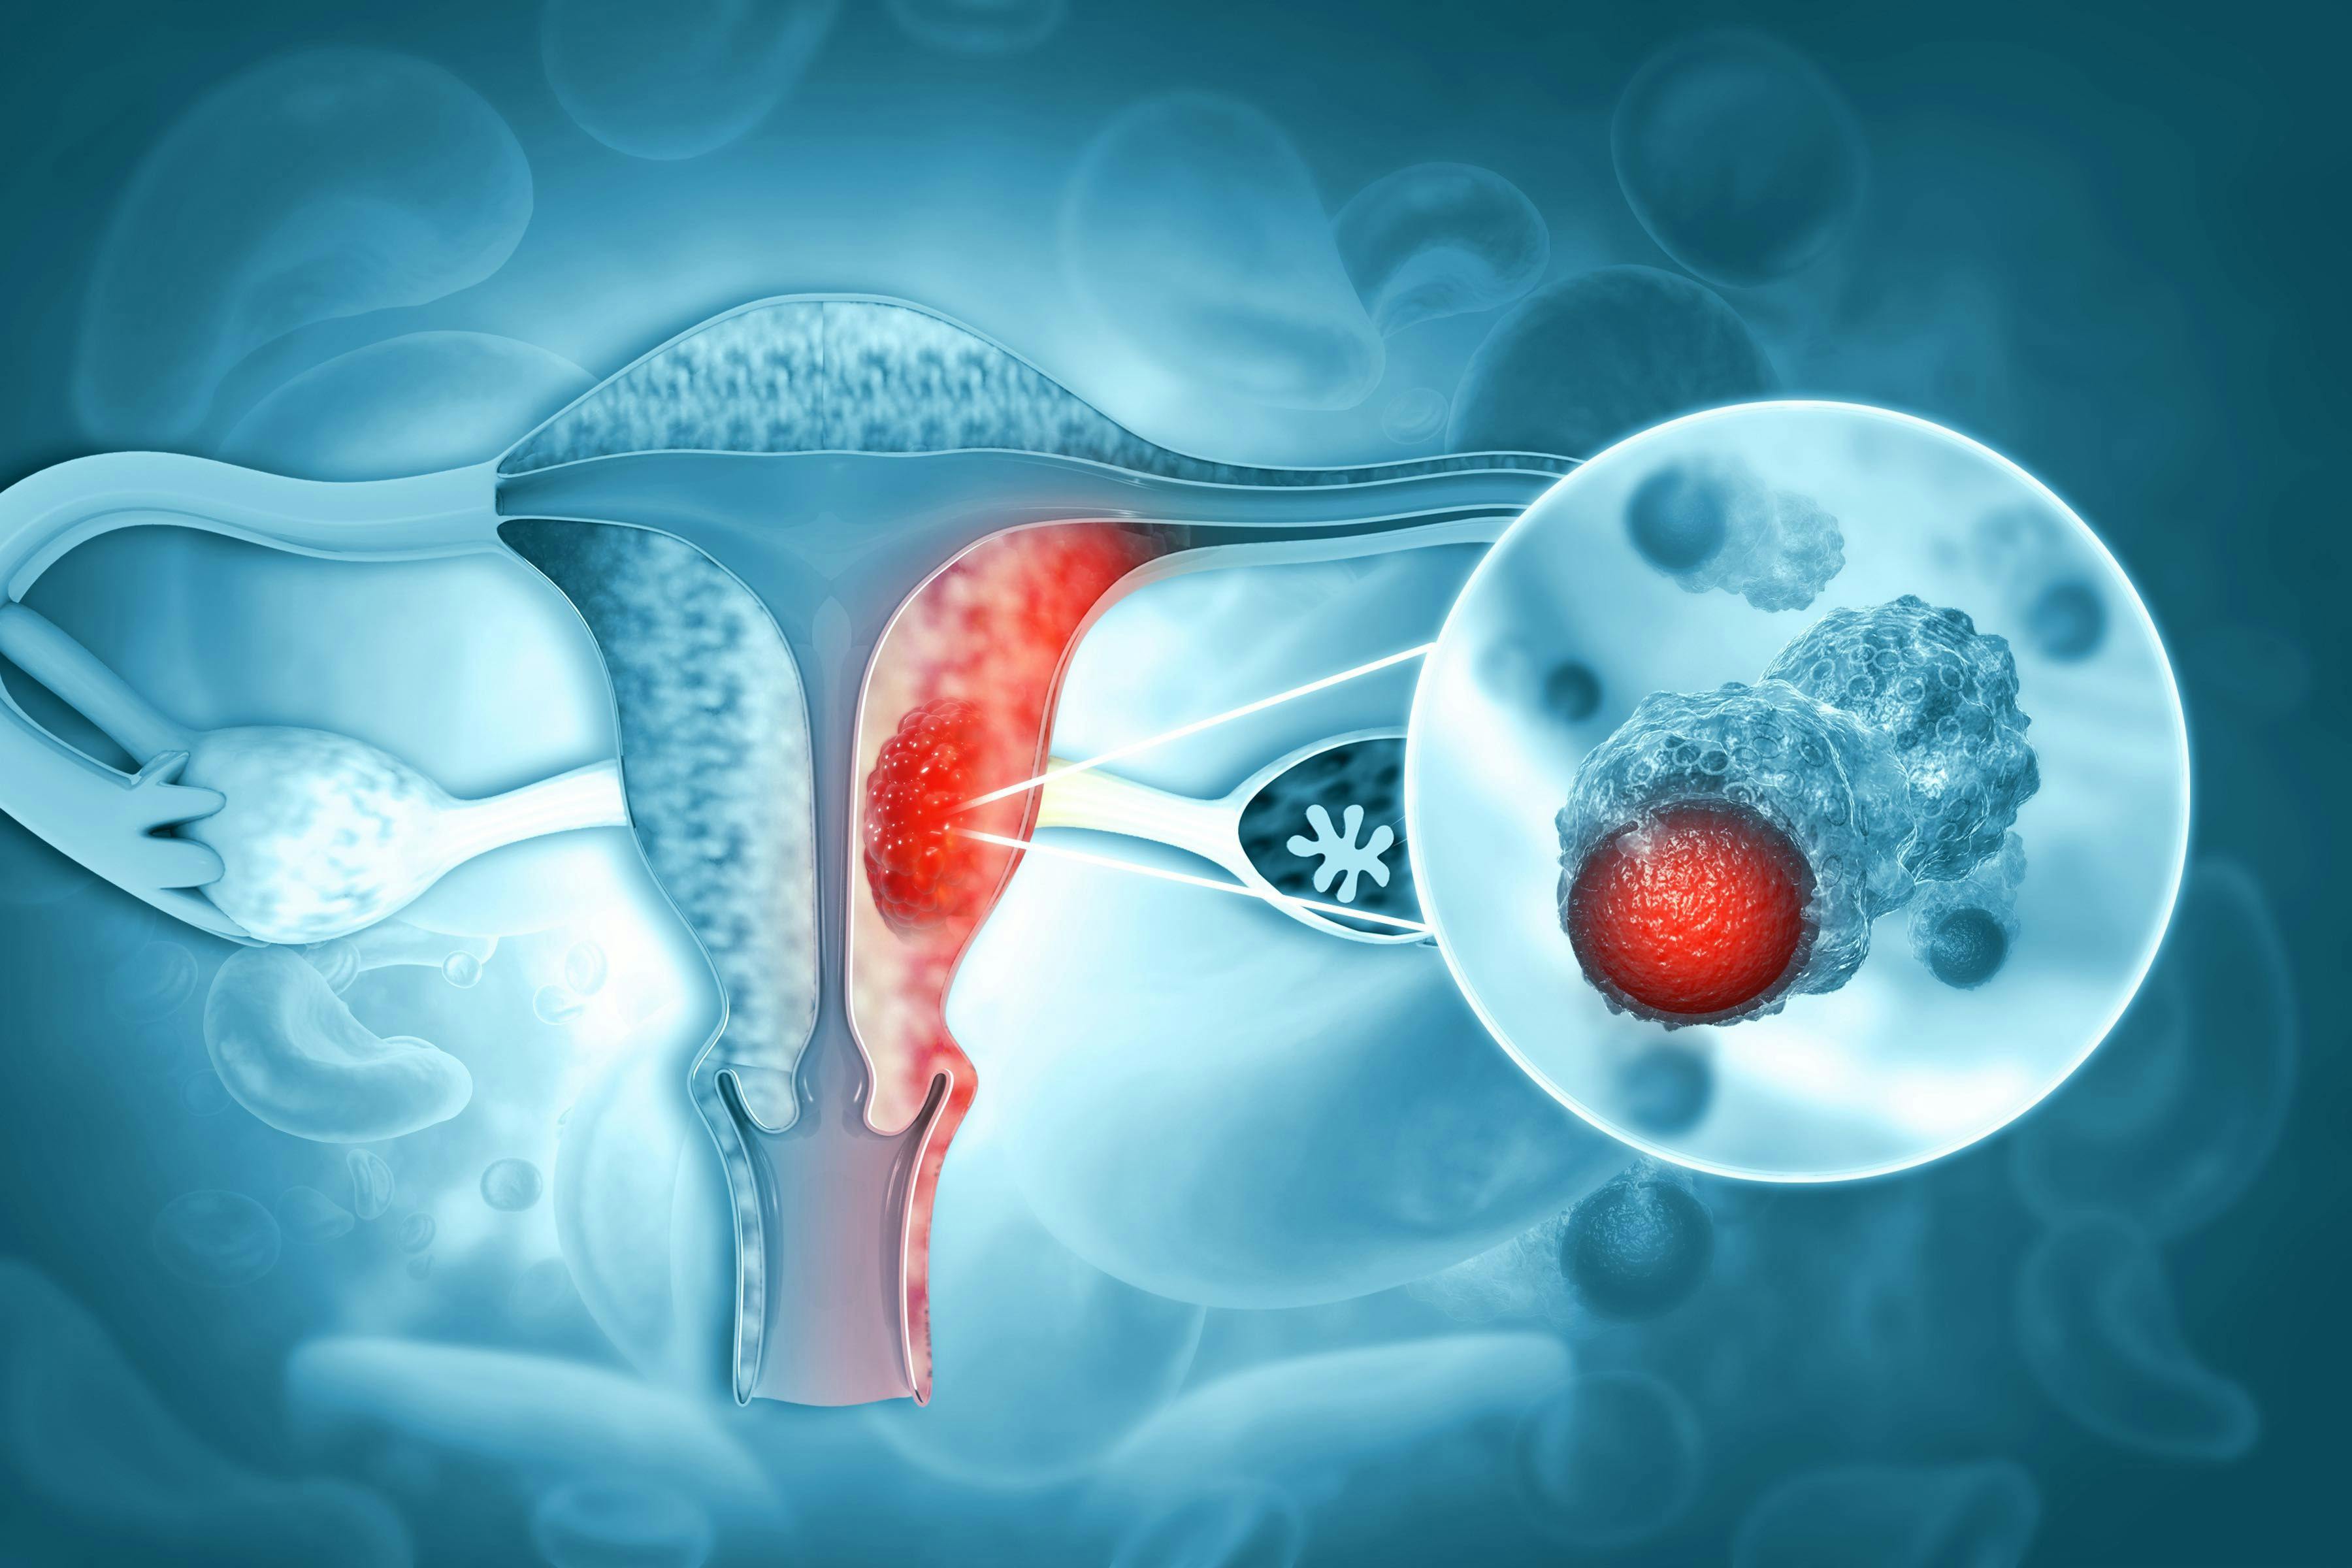 Endometrial tumor | Image credit: Crystal light - stock.adobe.com